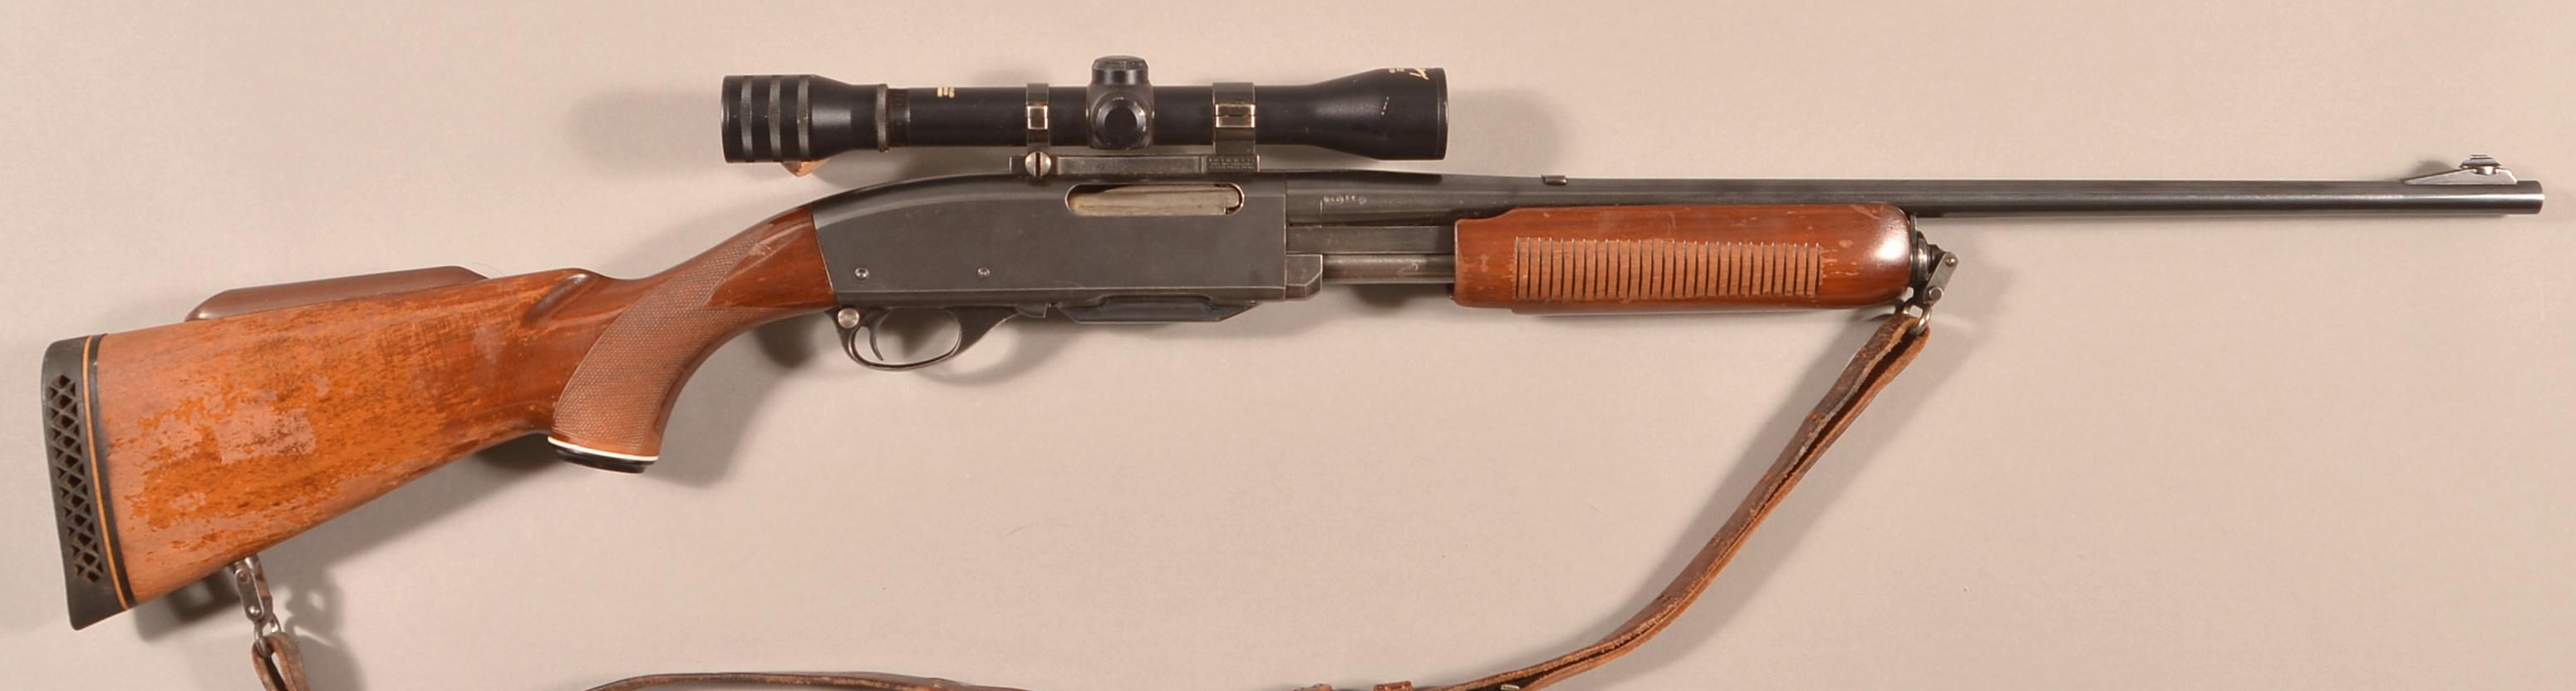 Remington model 760 30-06 slide action rifle